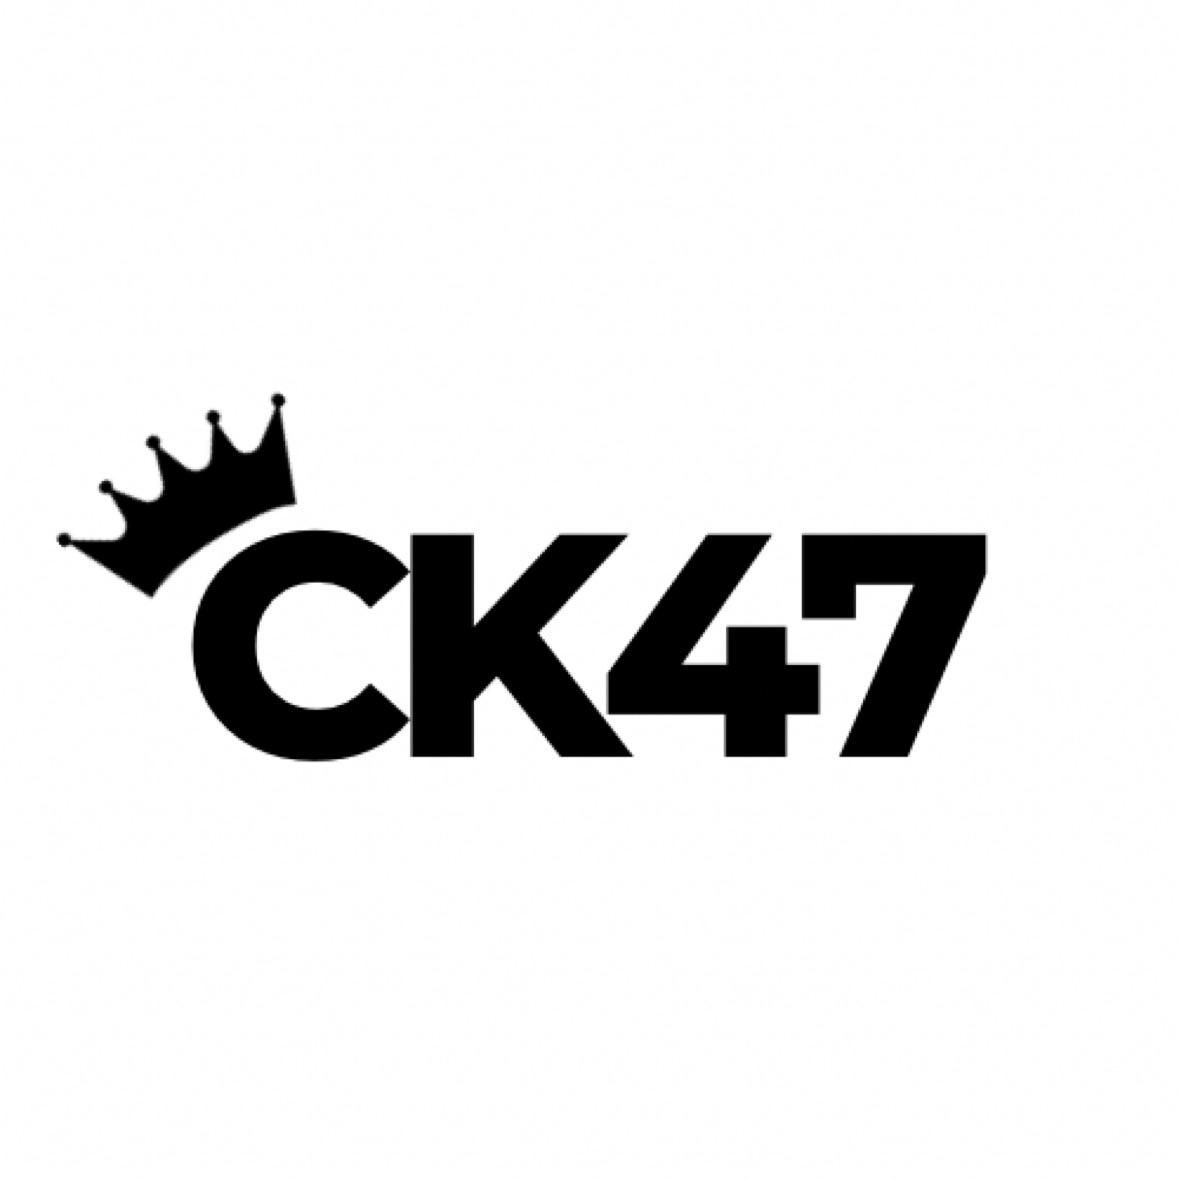 CK47 User Profile